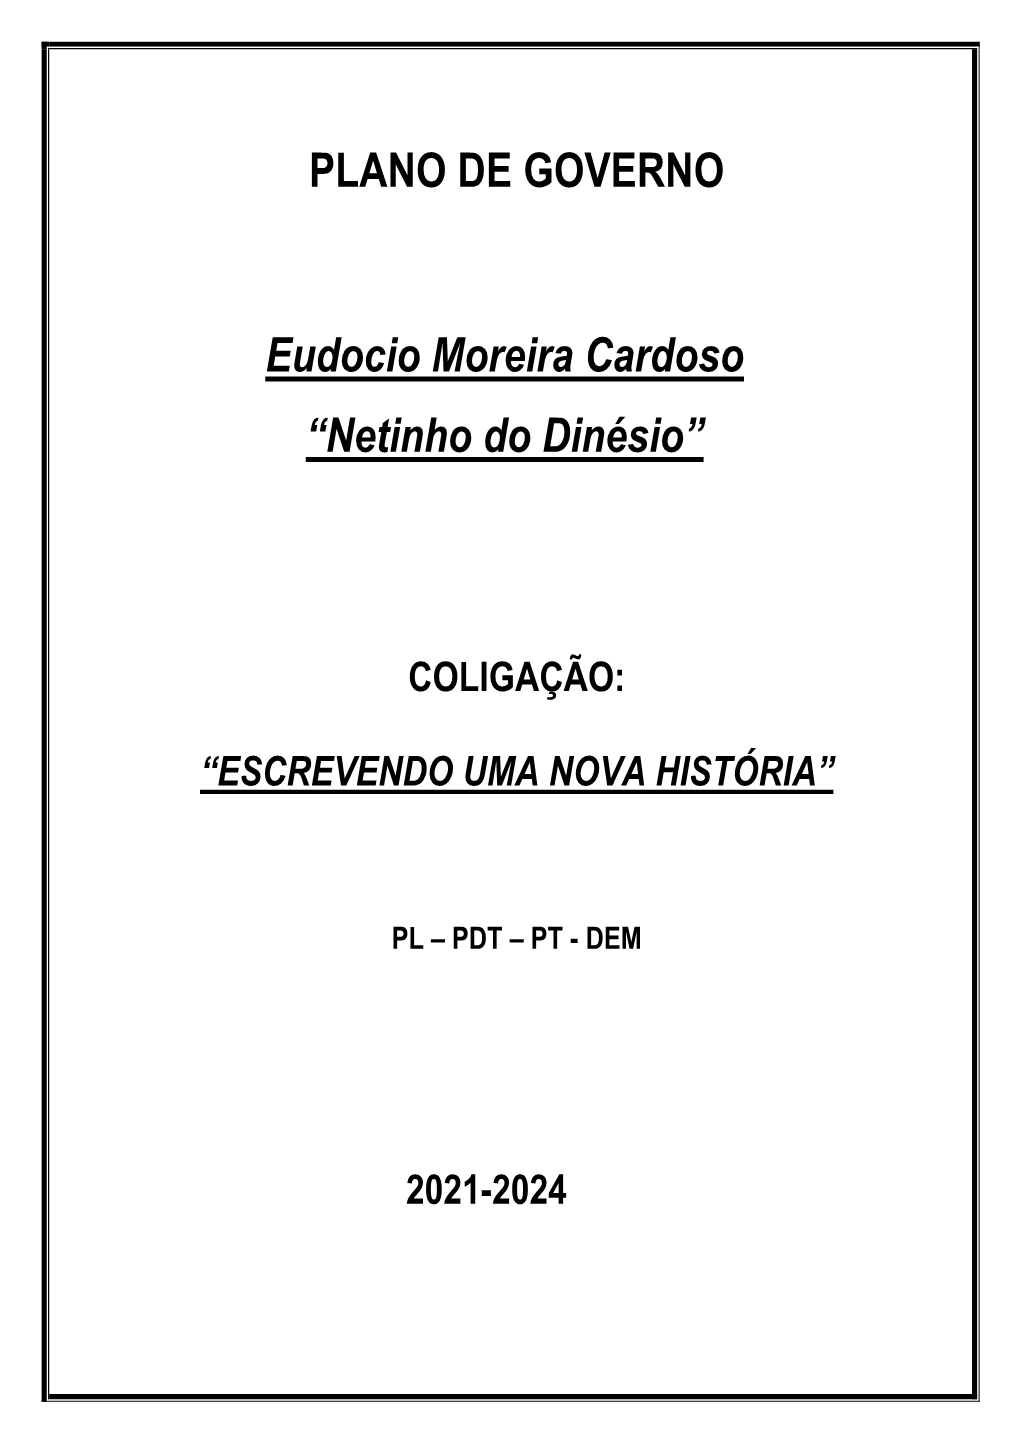 PLANO DE GOVERNO Eudocio Moreira Cardoso